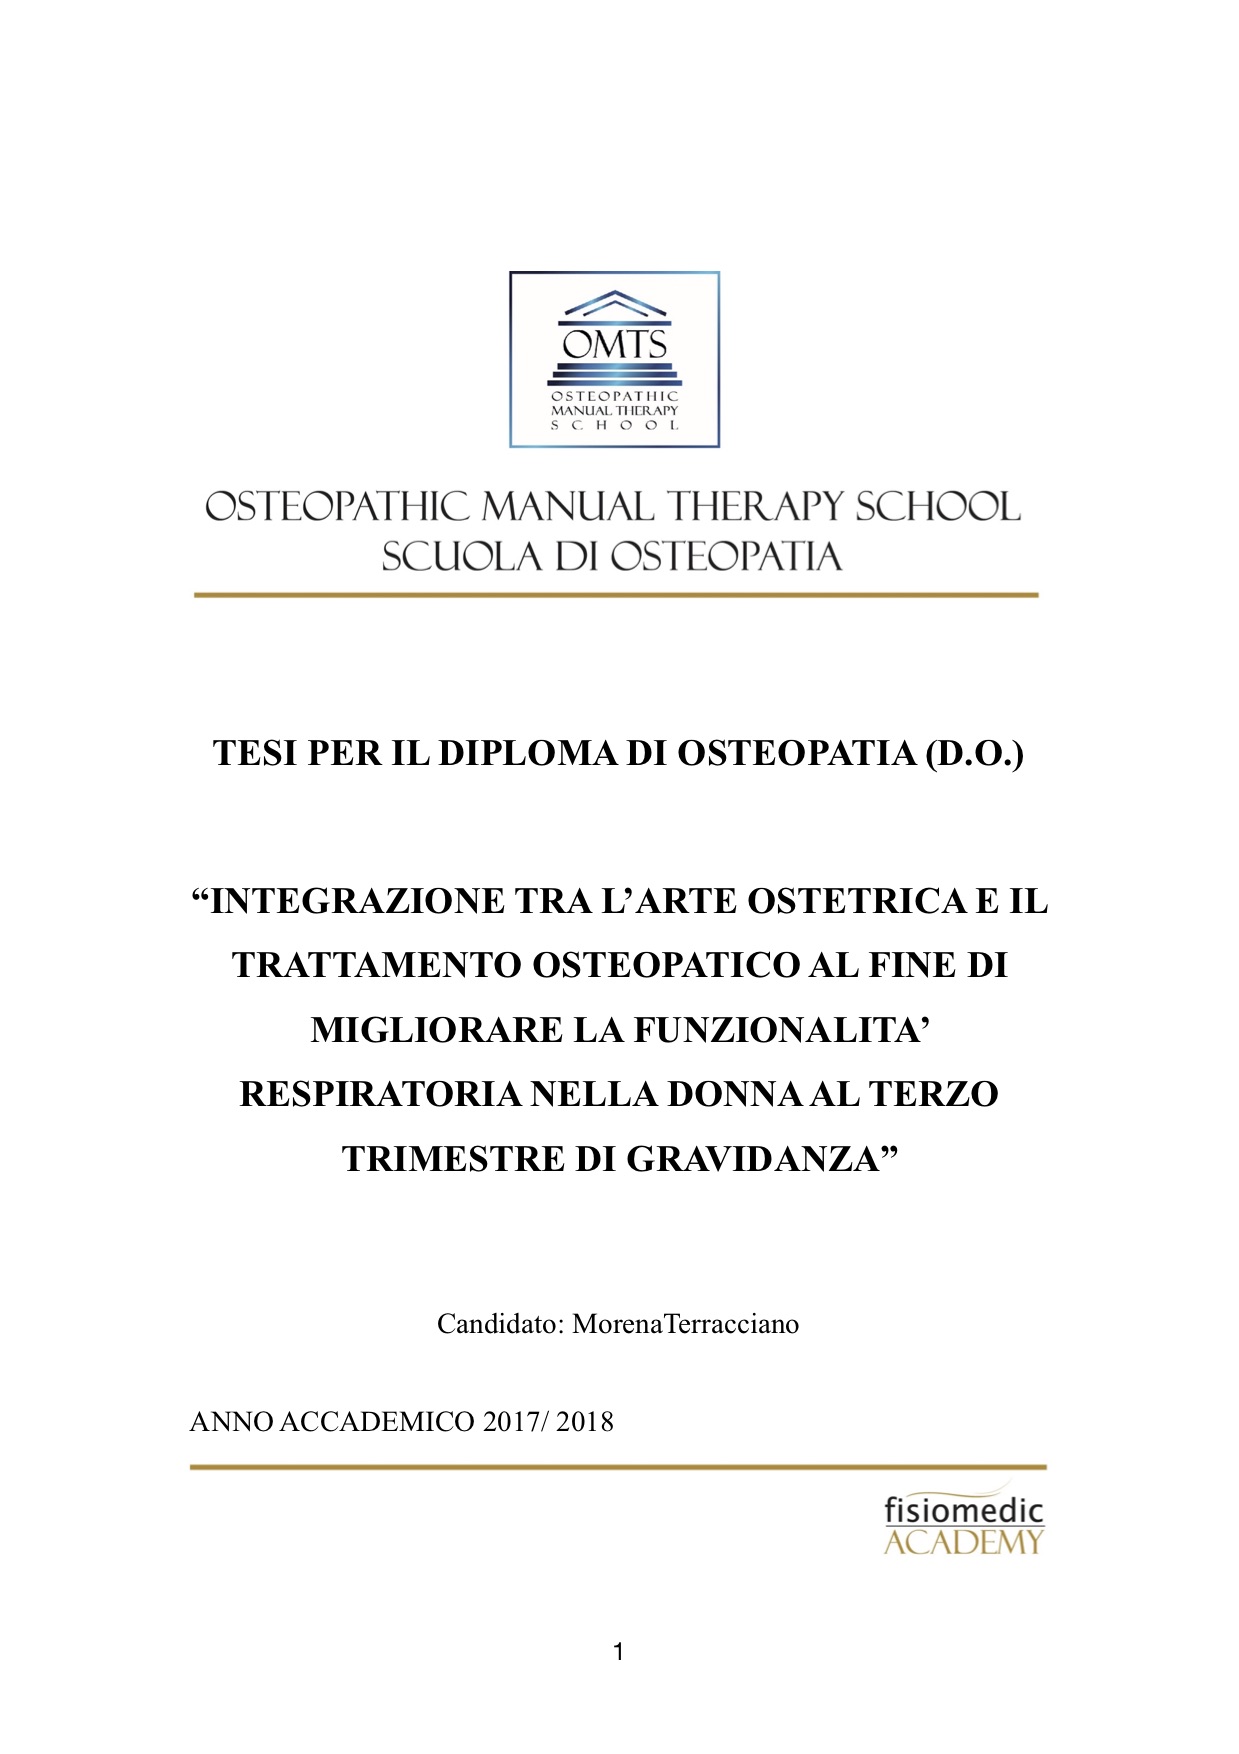 Morena Terracciano Tesi Diploma Osteopatia 2018